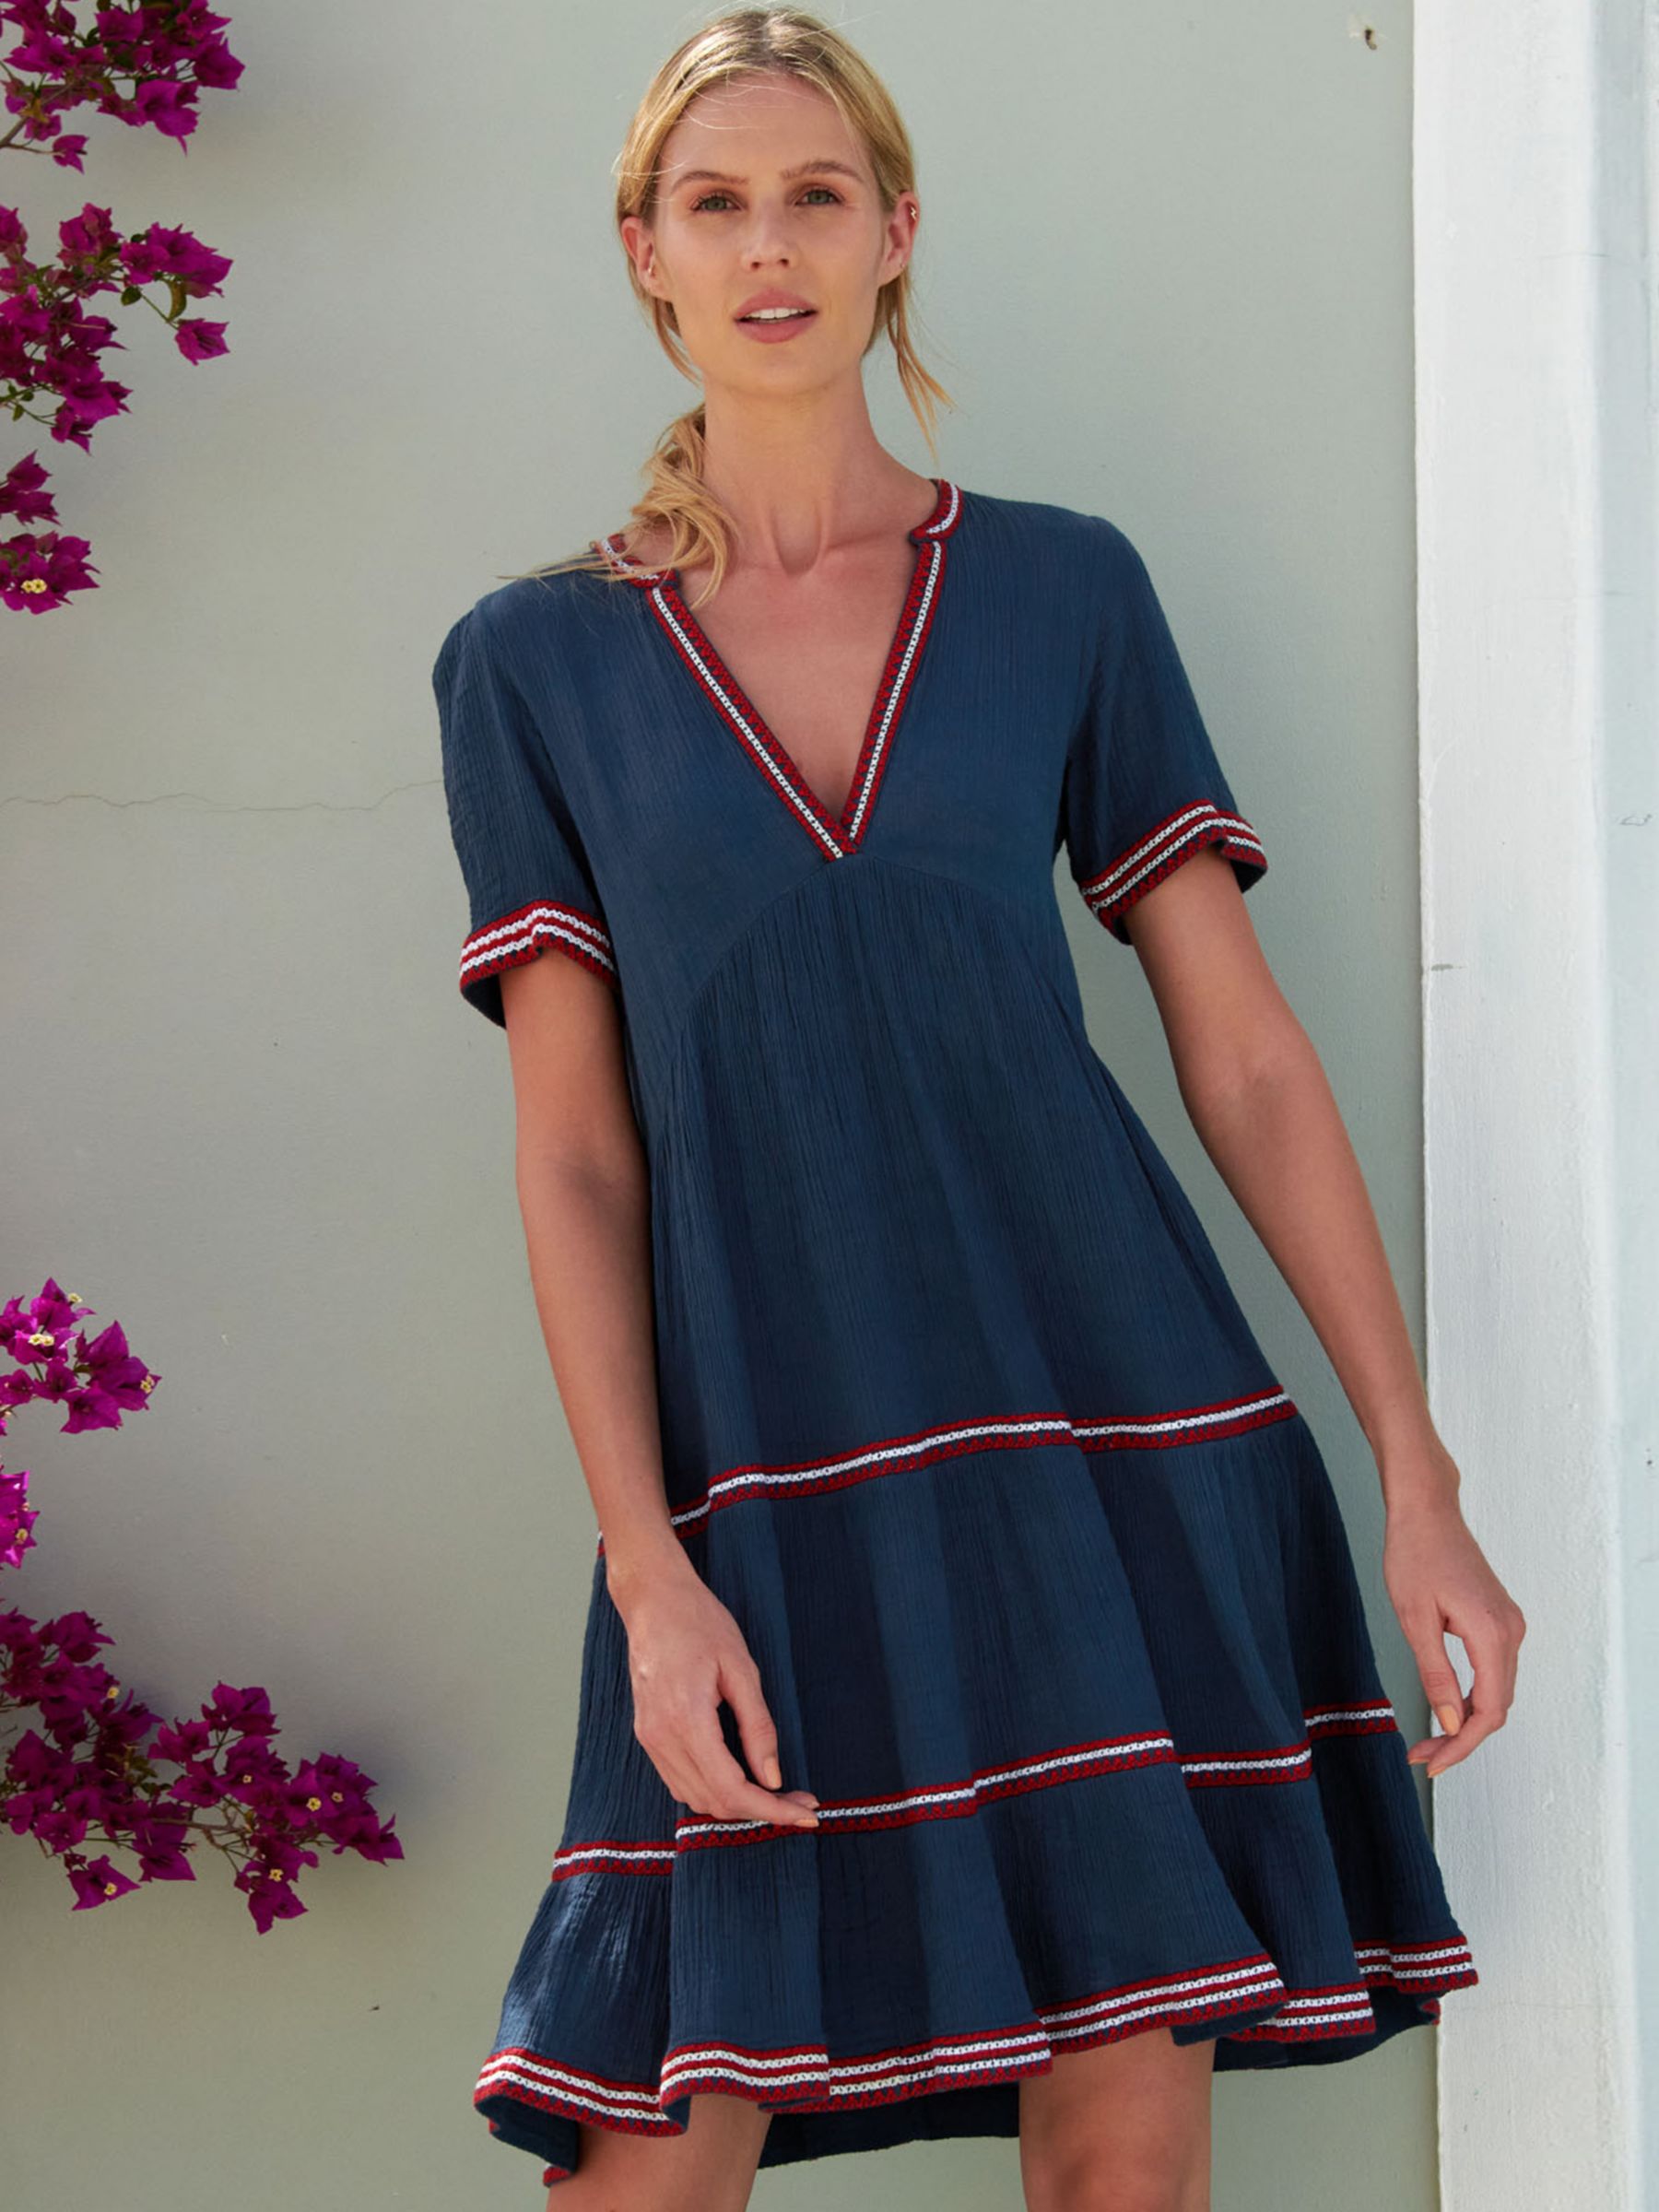 Aspiga Meredith Tiered Summer Dress, Plain Navy/Red, XS